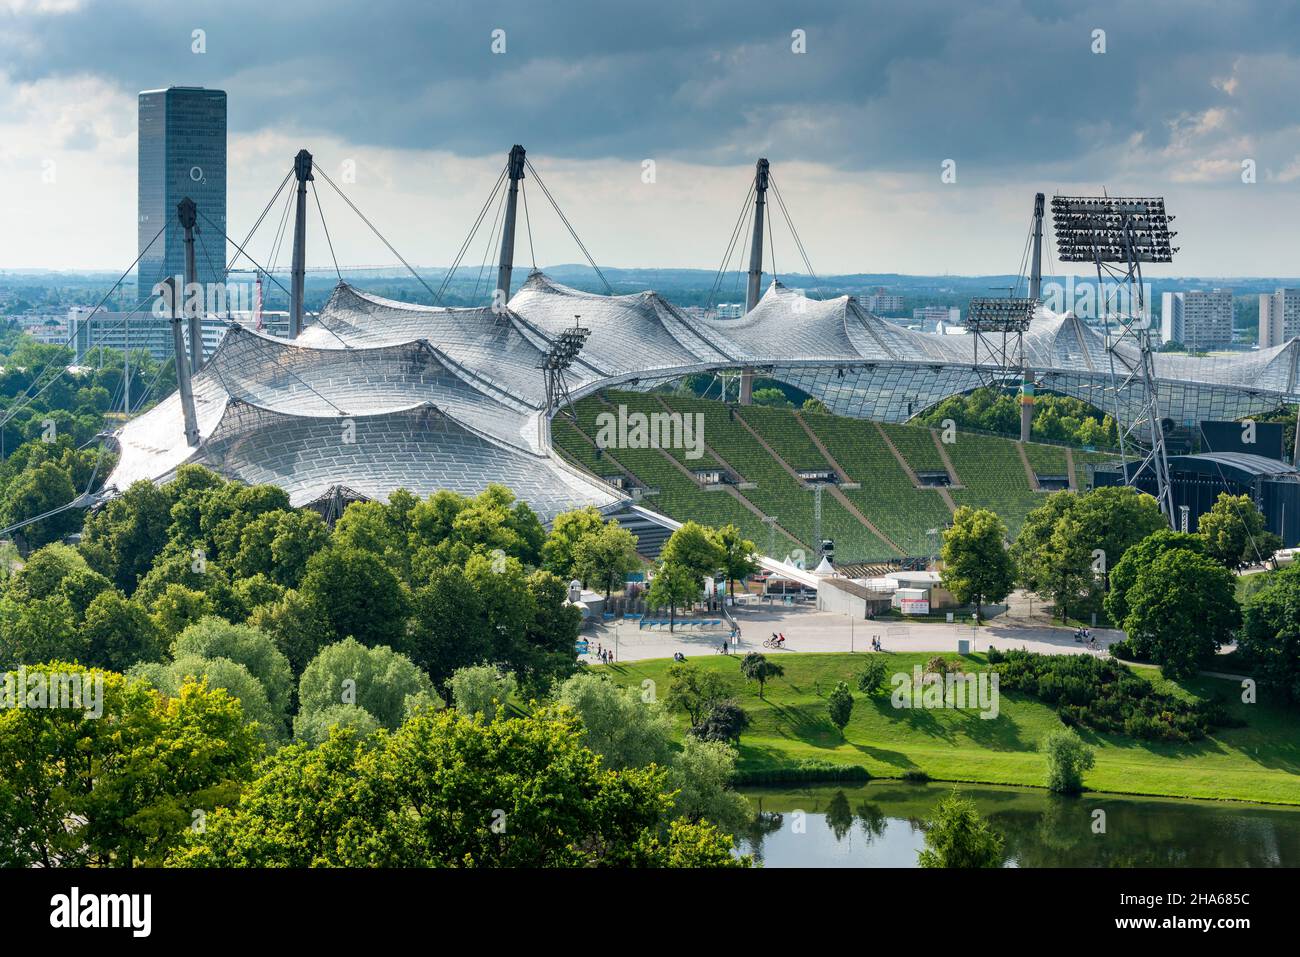 olympiastadion vom olympiaberg aus gesehen, dahinter der O2-Turm Stockfoto